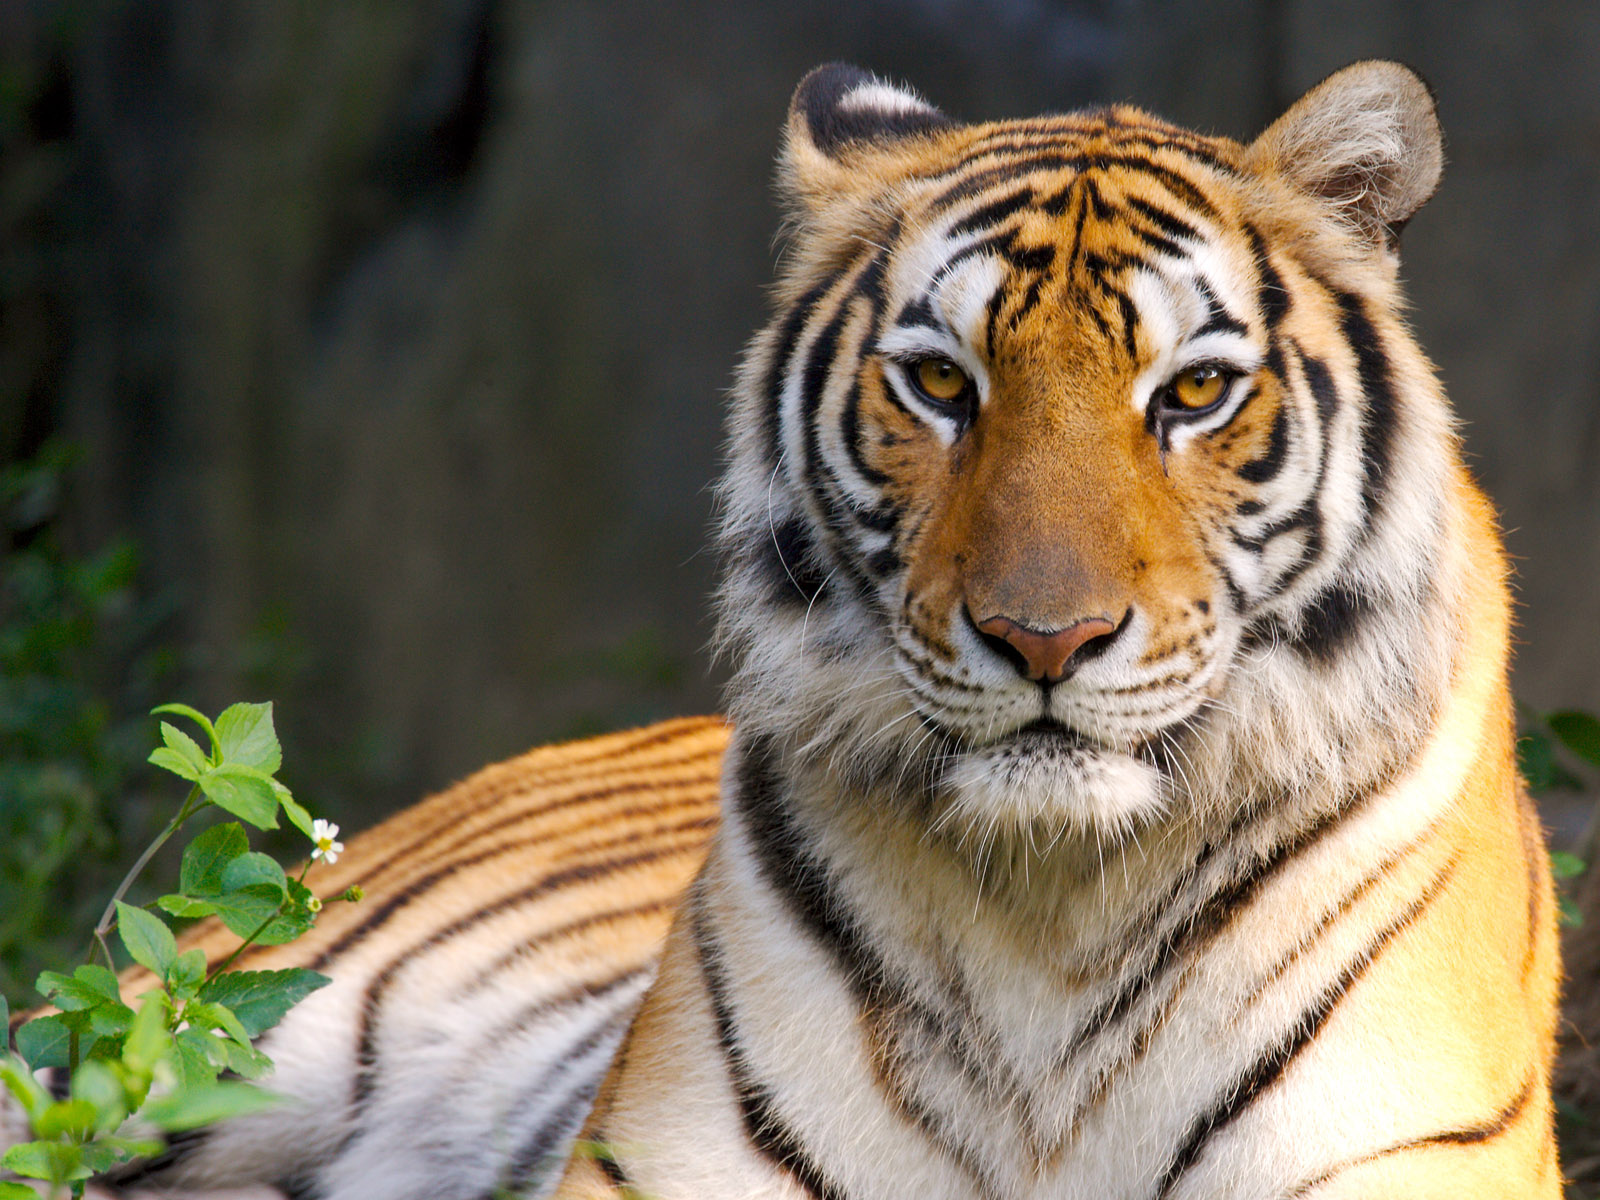  tigers indian tigers cute tigers tiger cu bs tigers photos wallpapers